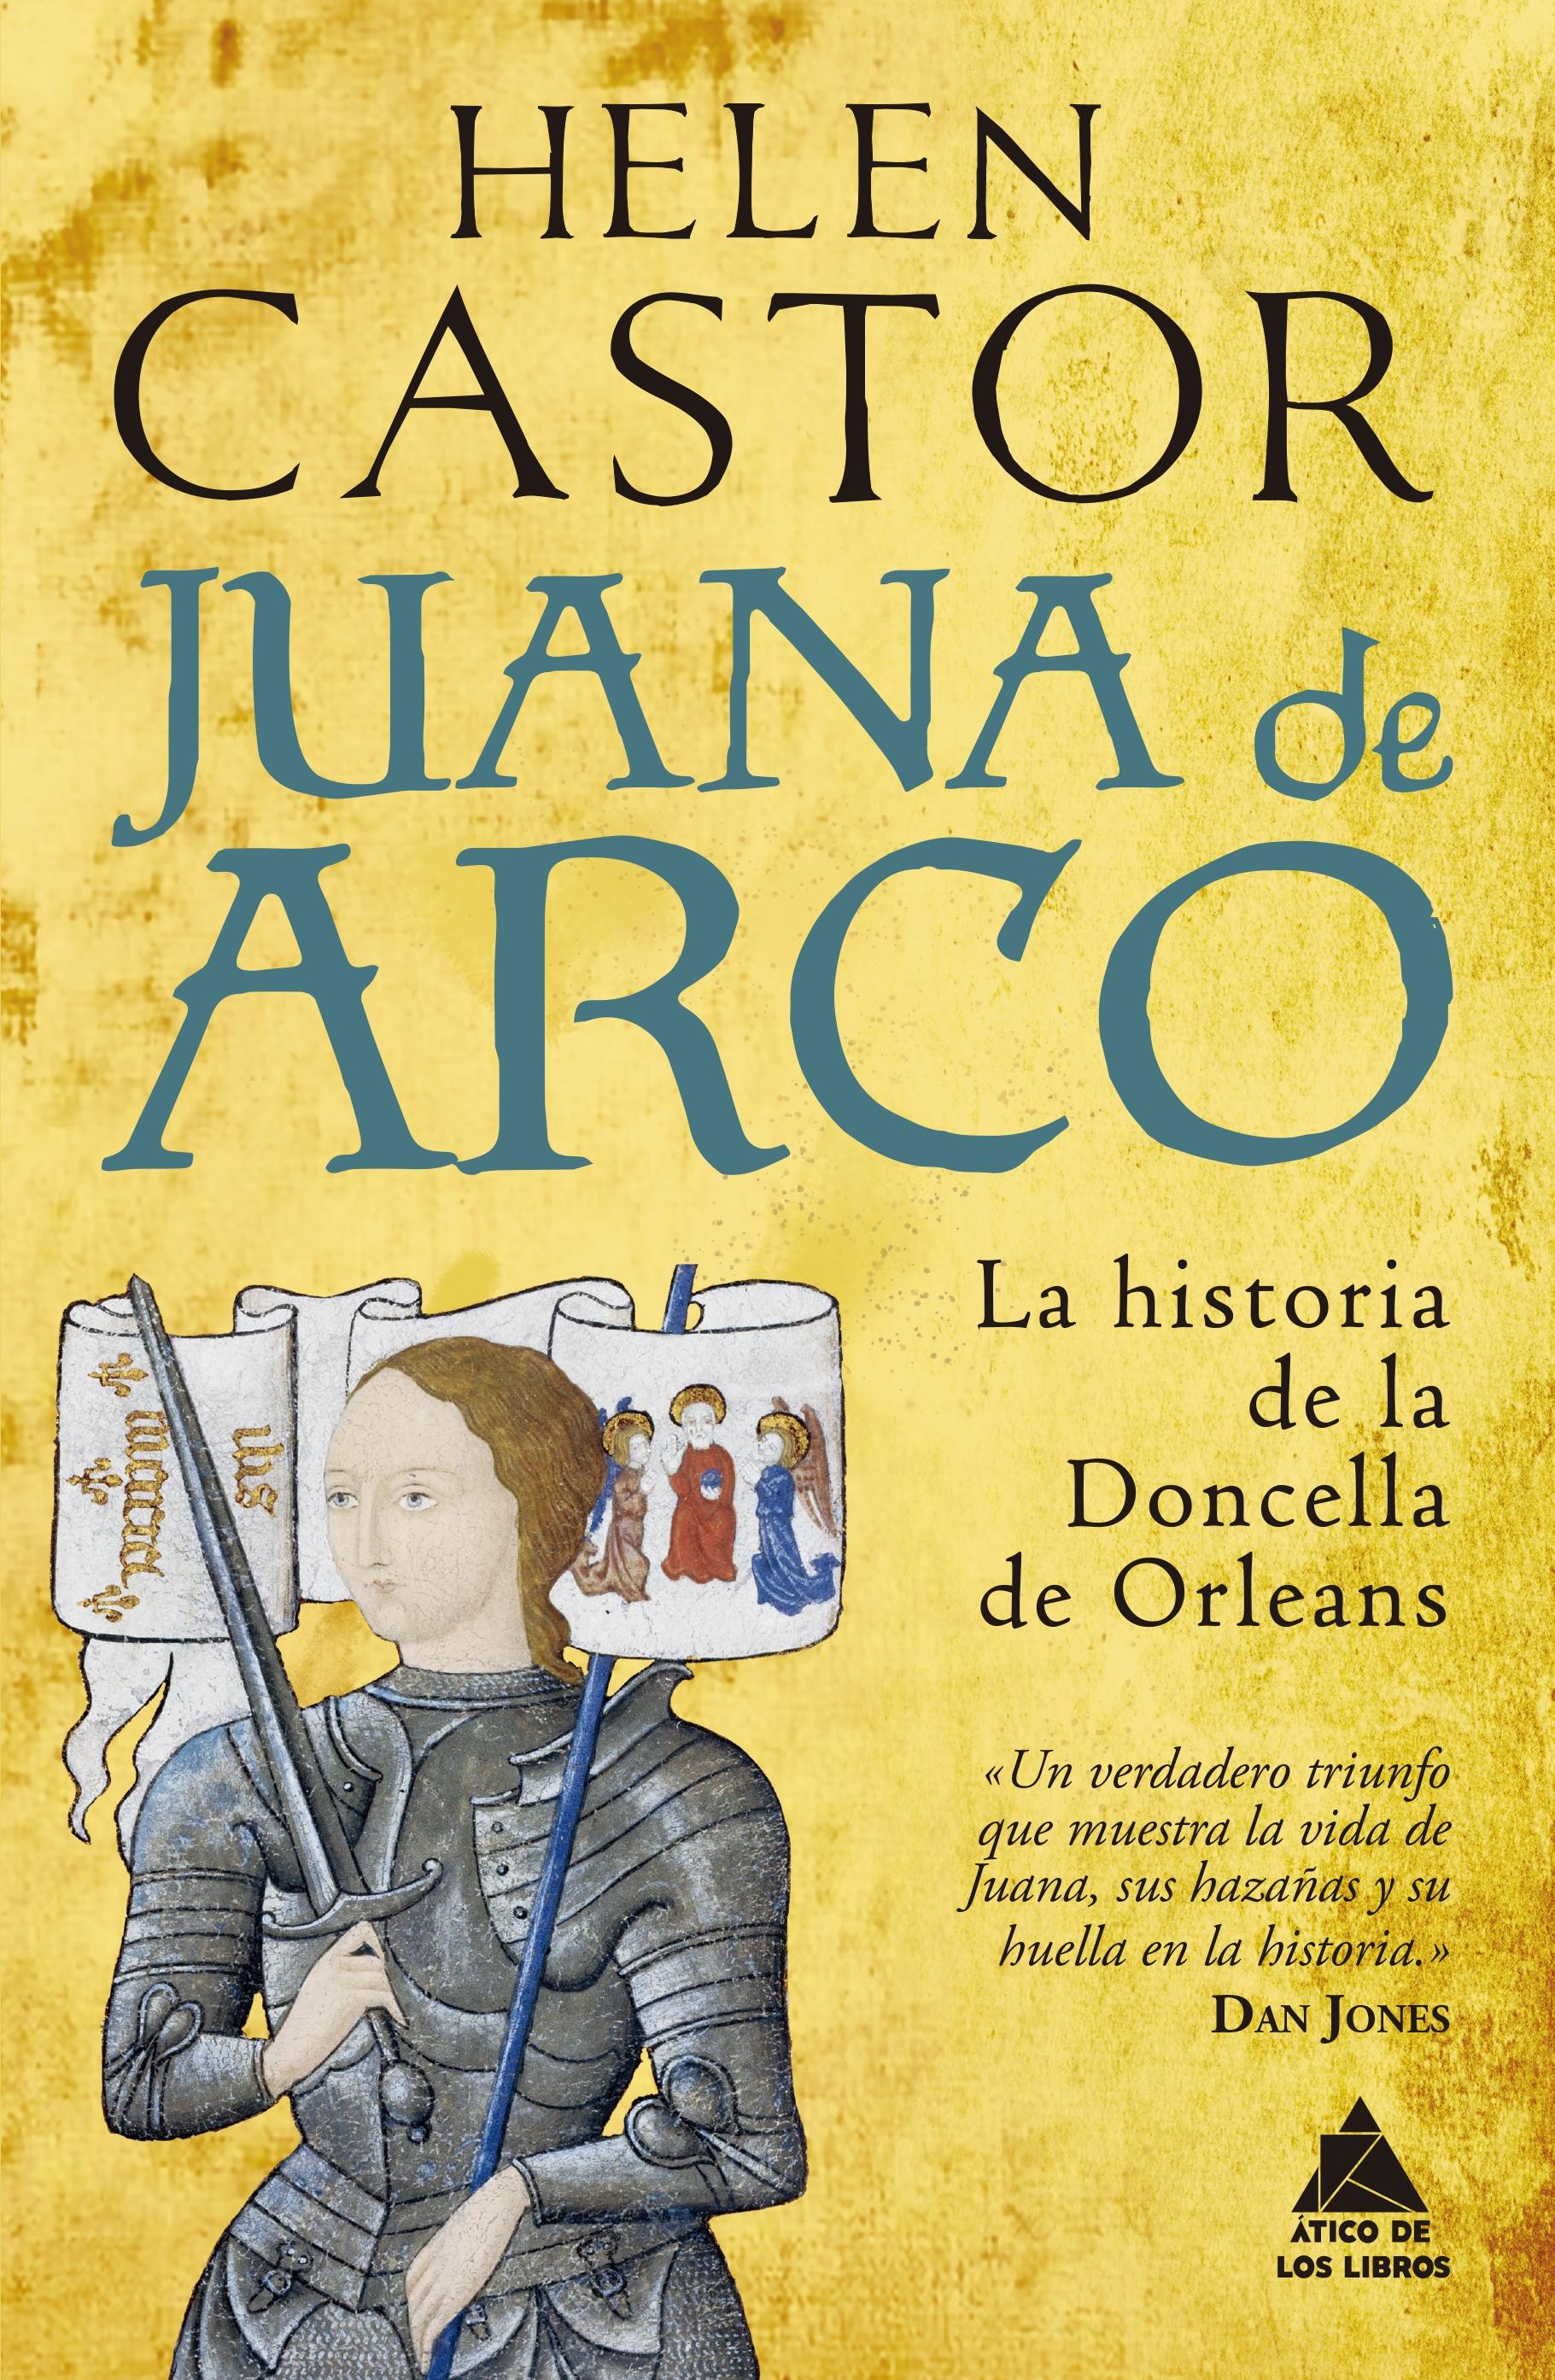 Juana de Arco "La historia de la Doncella de Orleans"